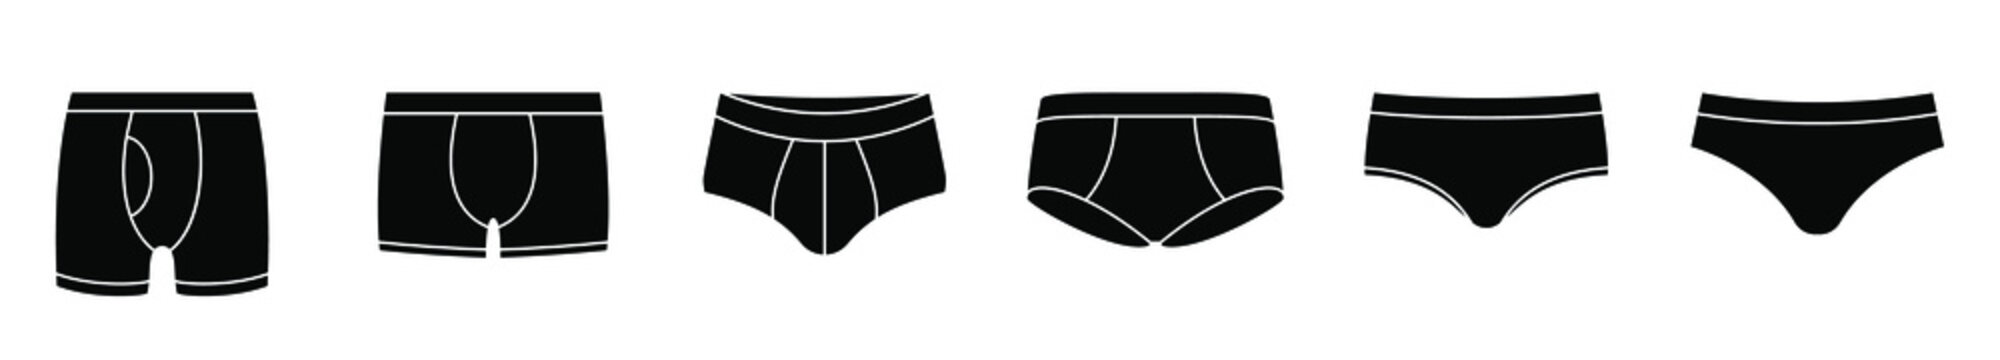 Underpants icon. Set of men's underwear icons. Vector illustration. Men's underpants vector icons. Black underwear icons